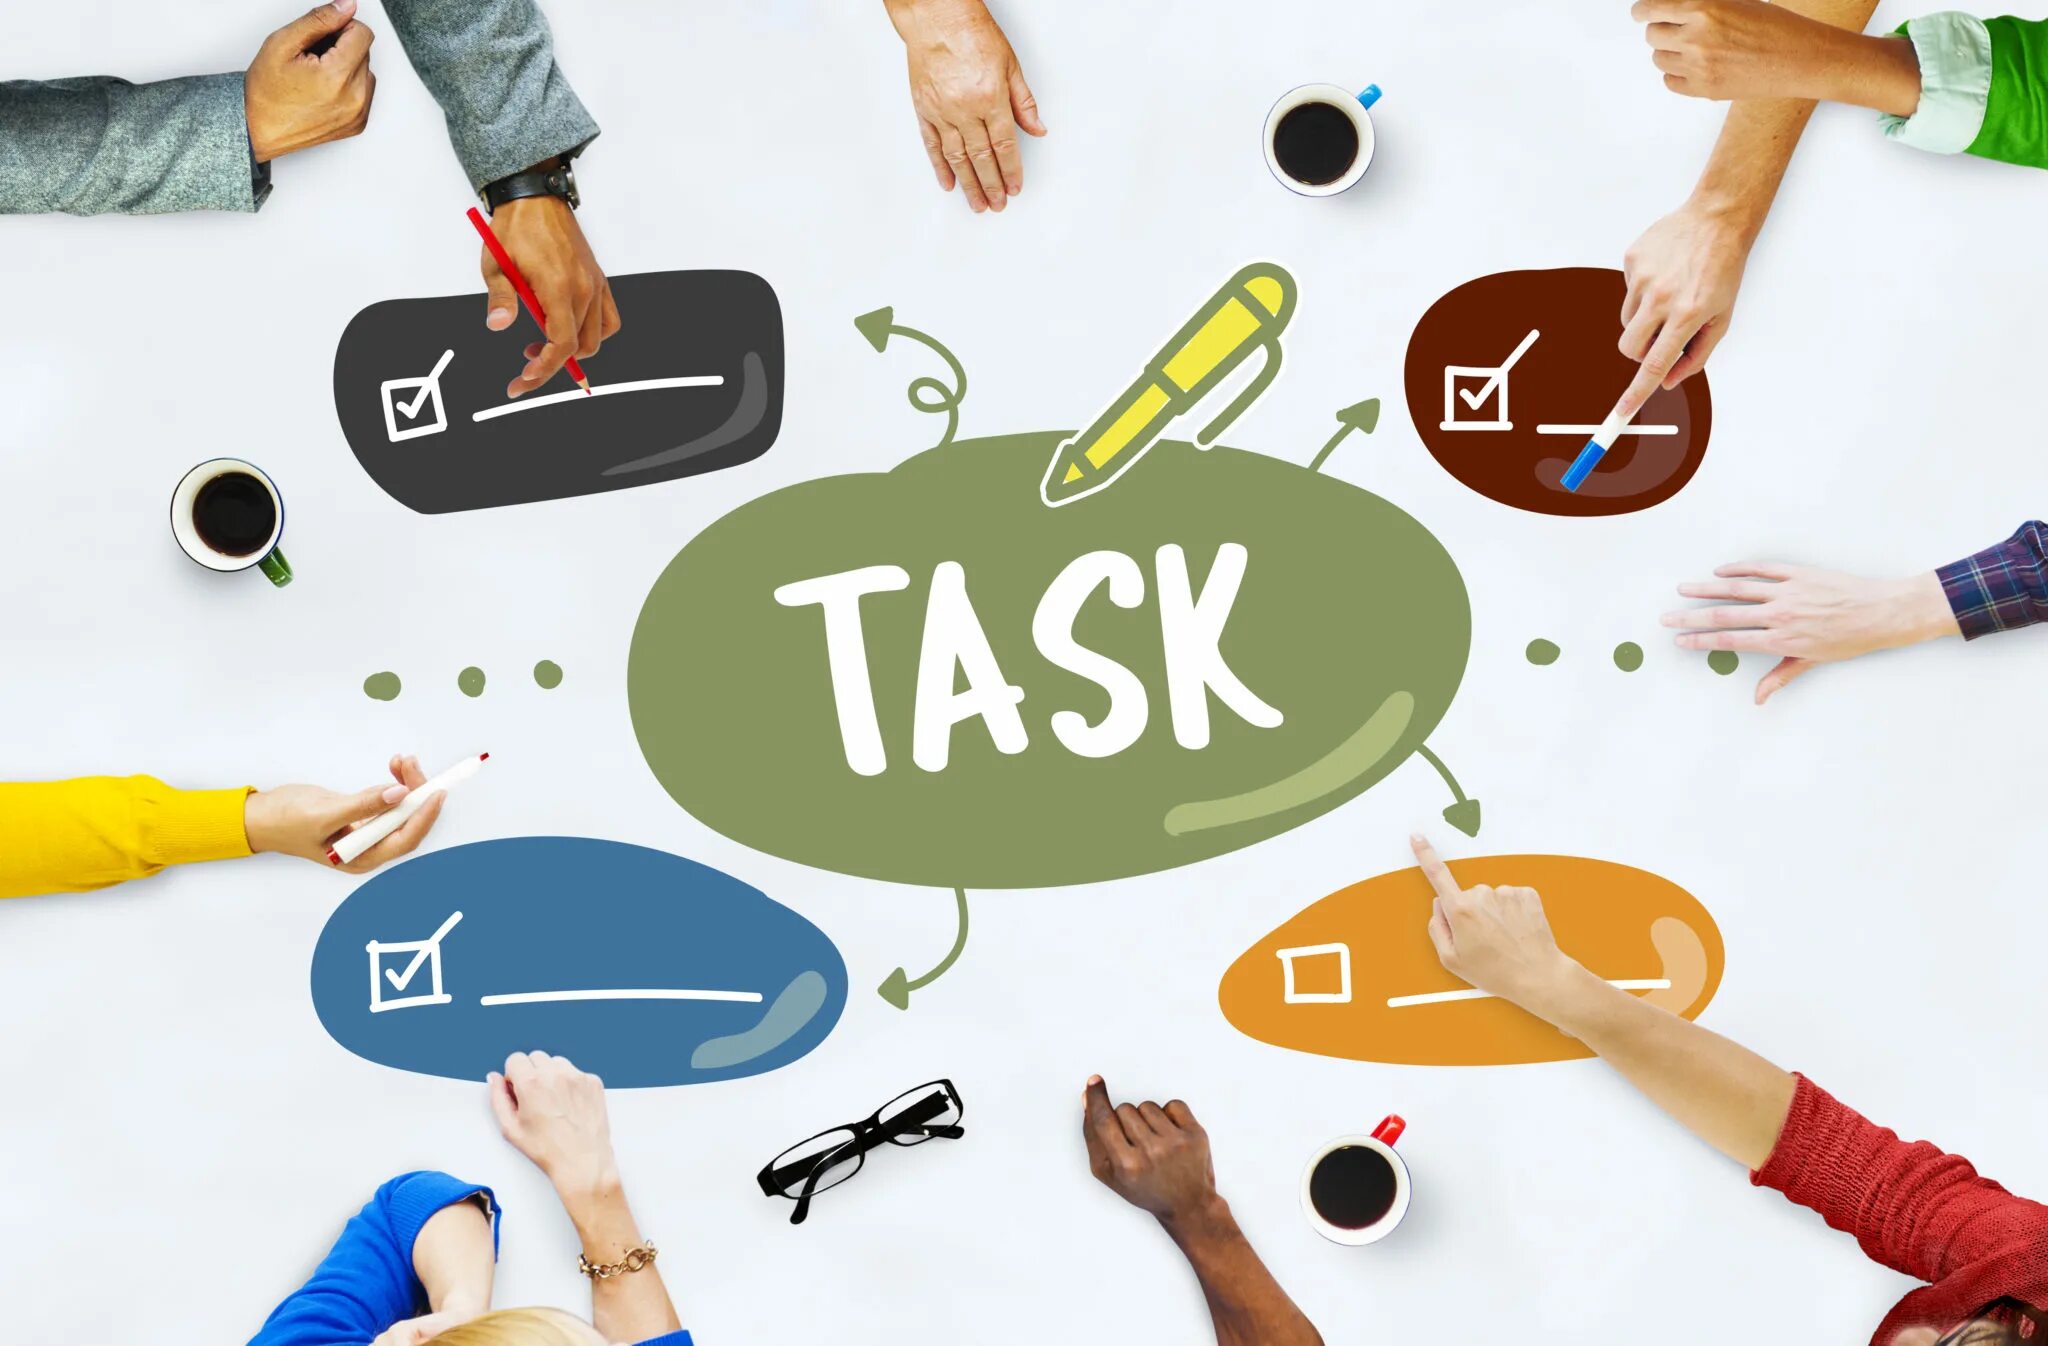 Https task. Tasks. Task image. Do a task. Task 1 картинка.